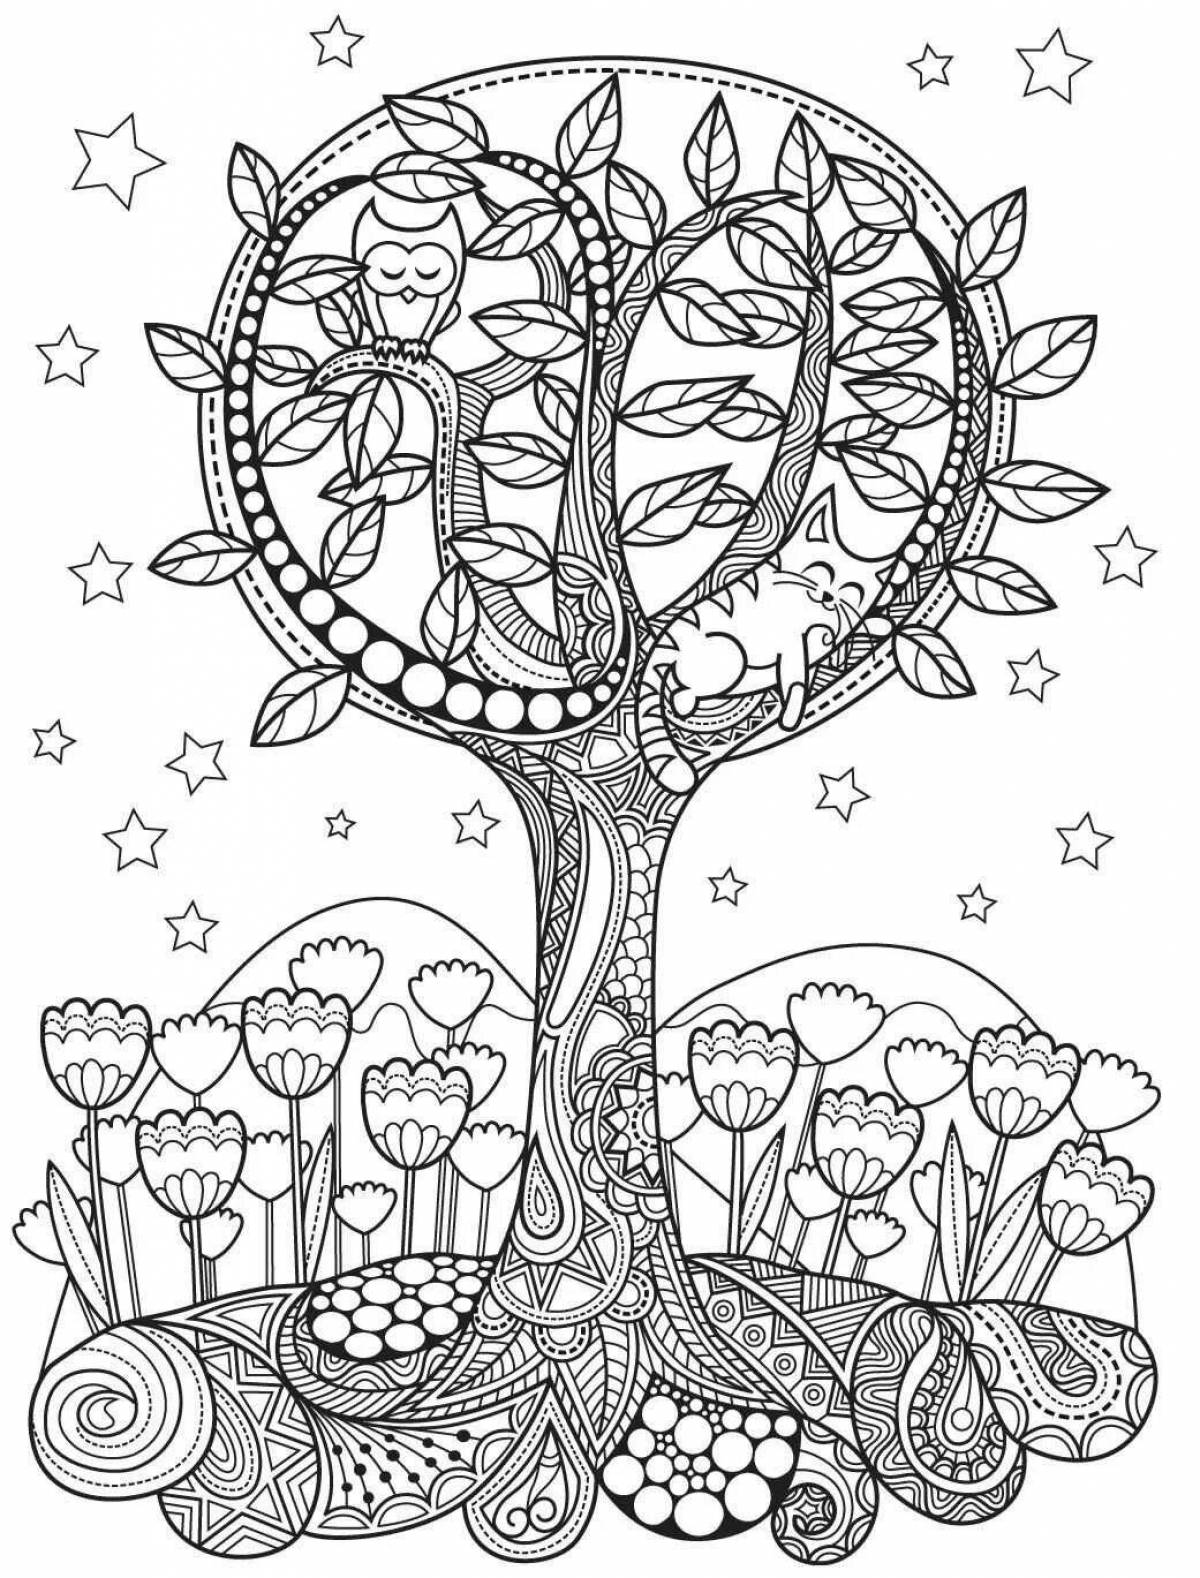 Fantastic magic tree coloring page